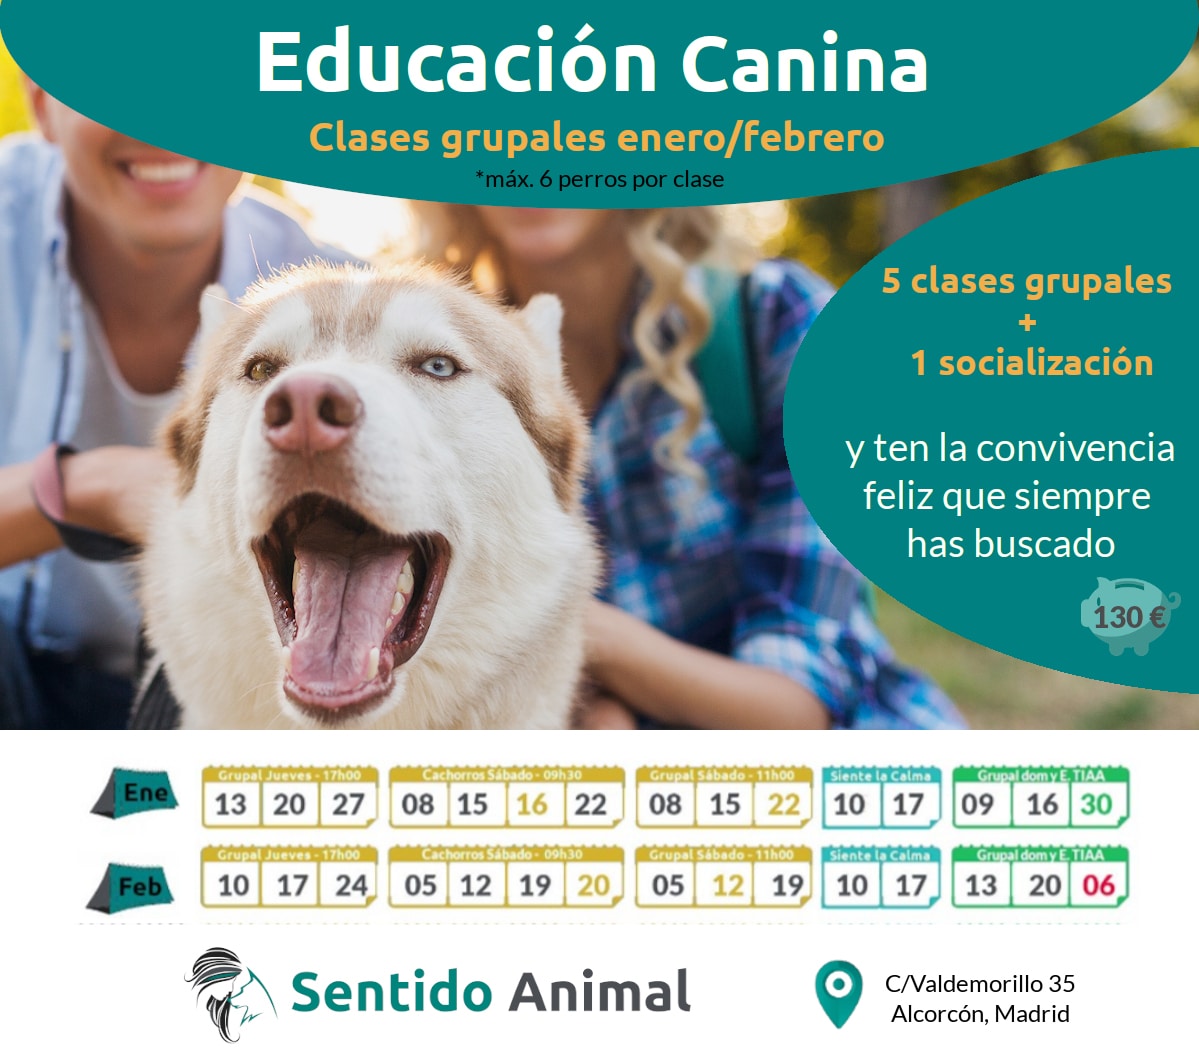 Mini-Curso de clases grupales de educación canina – domingos – ene22